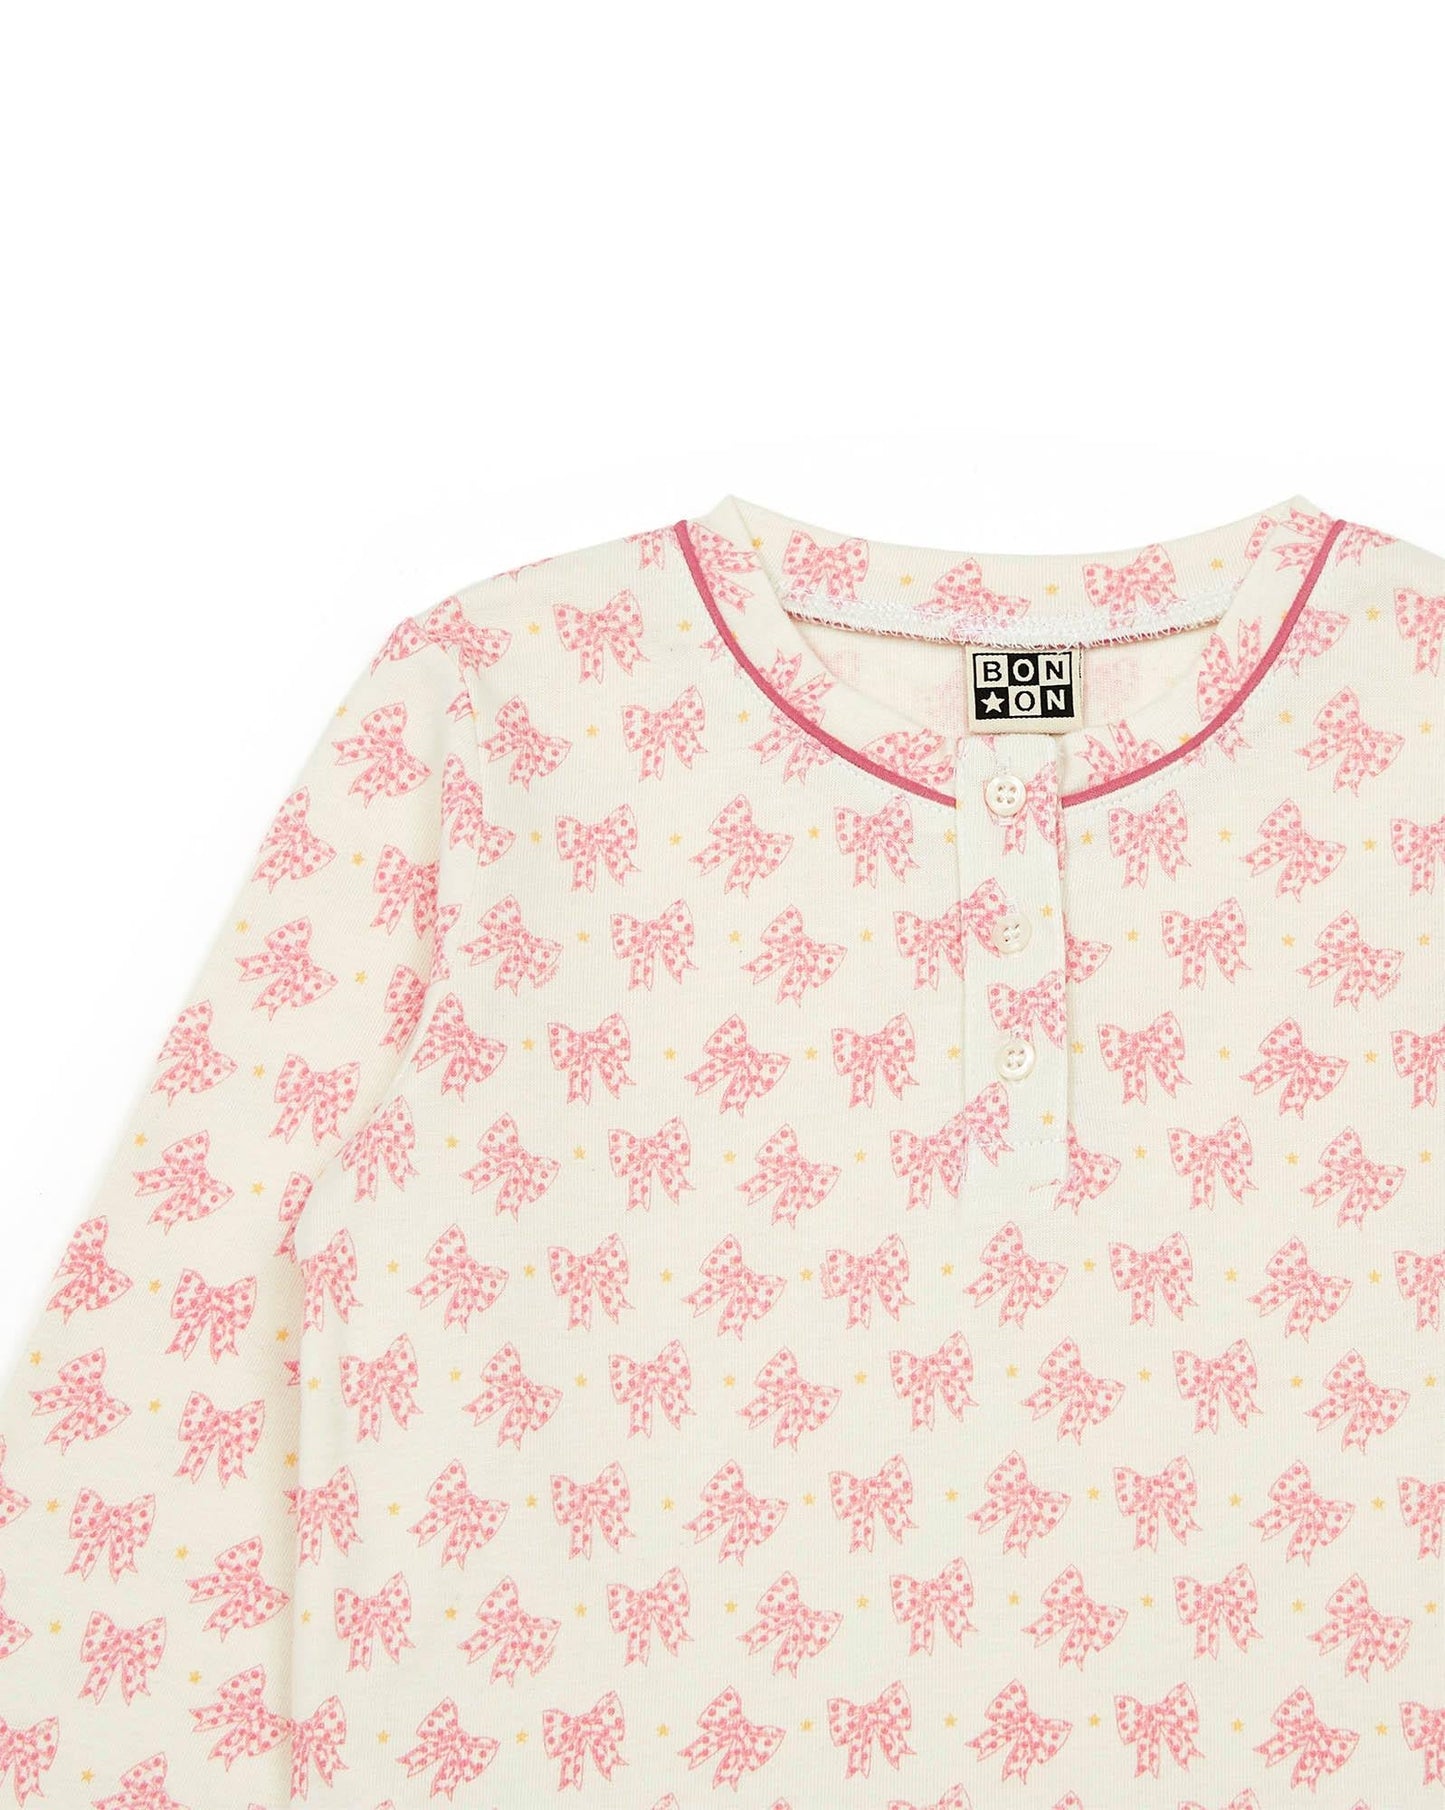 Pyjama - 2 pièces rose coton biologique